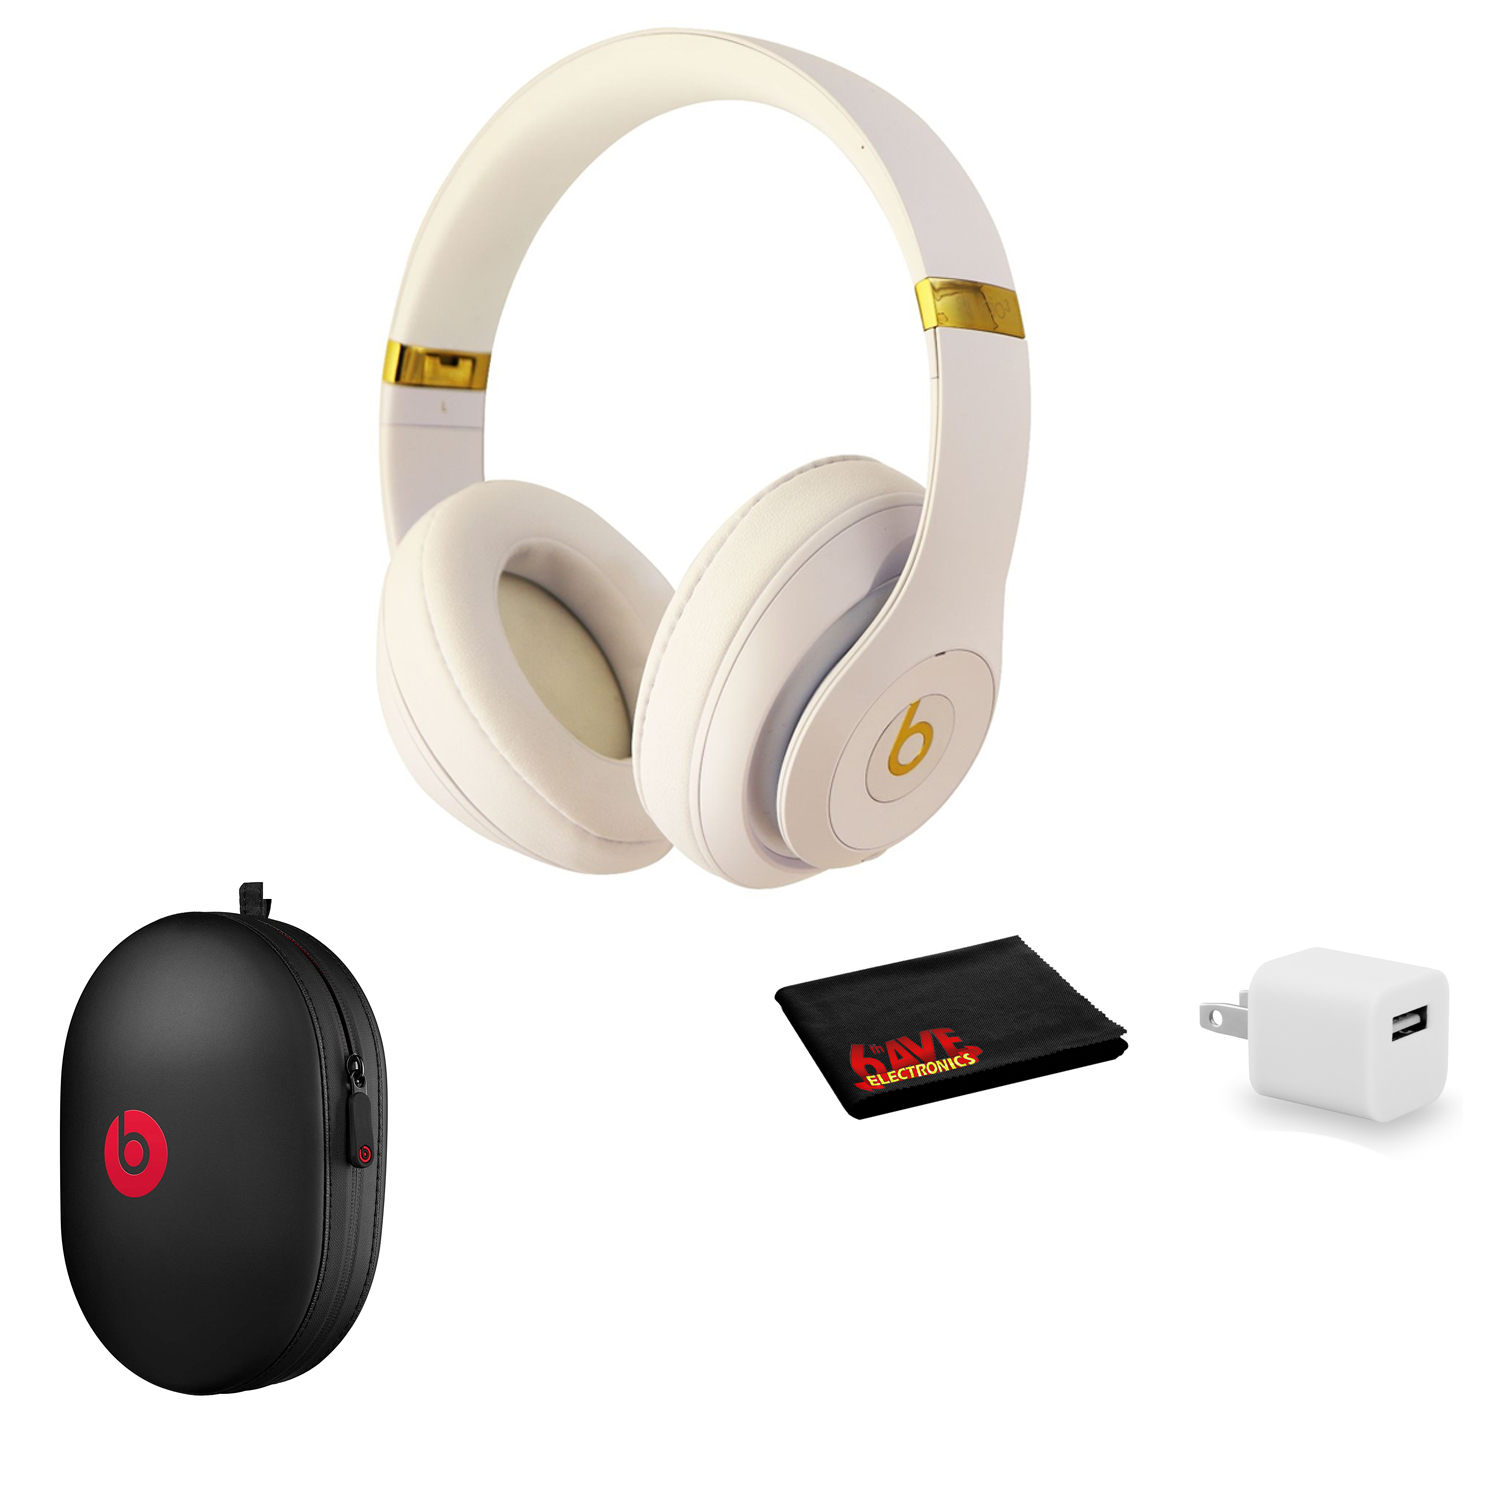 Beats Studio3 Wireless Series Over-Ear Headphones - Matte White/Gold  (MQ572LL/A) Kit with USB adapter | Walmart Canada